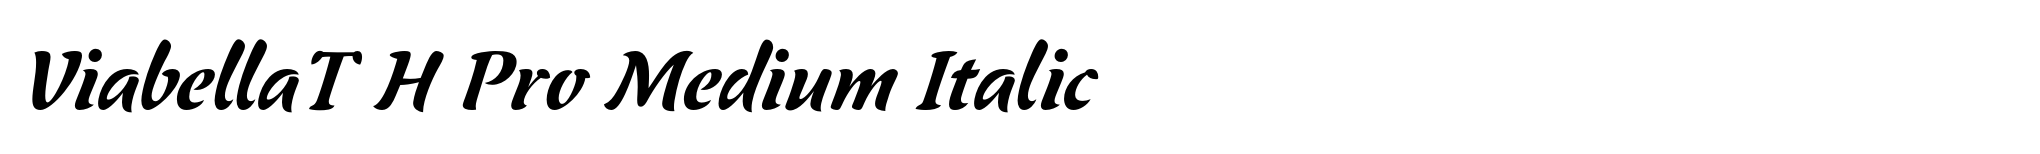 ViabellaT H Pro Medium Italic image